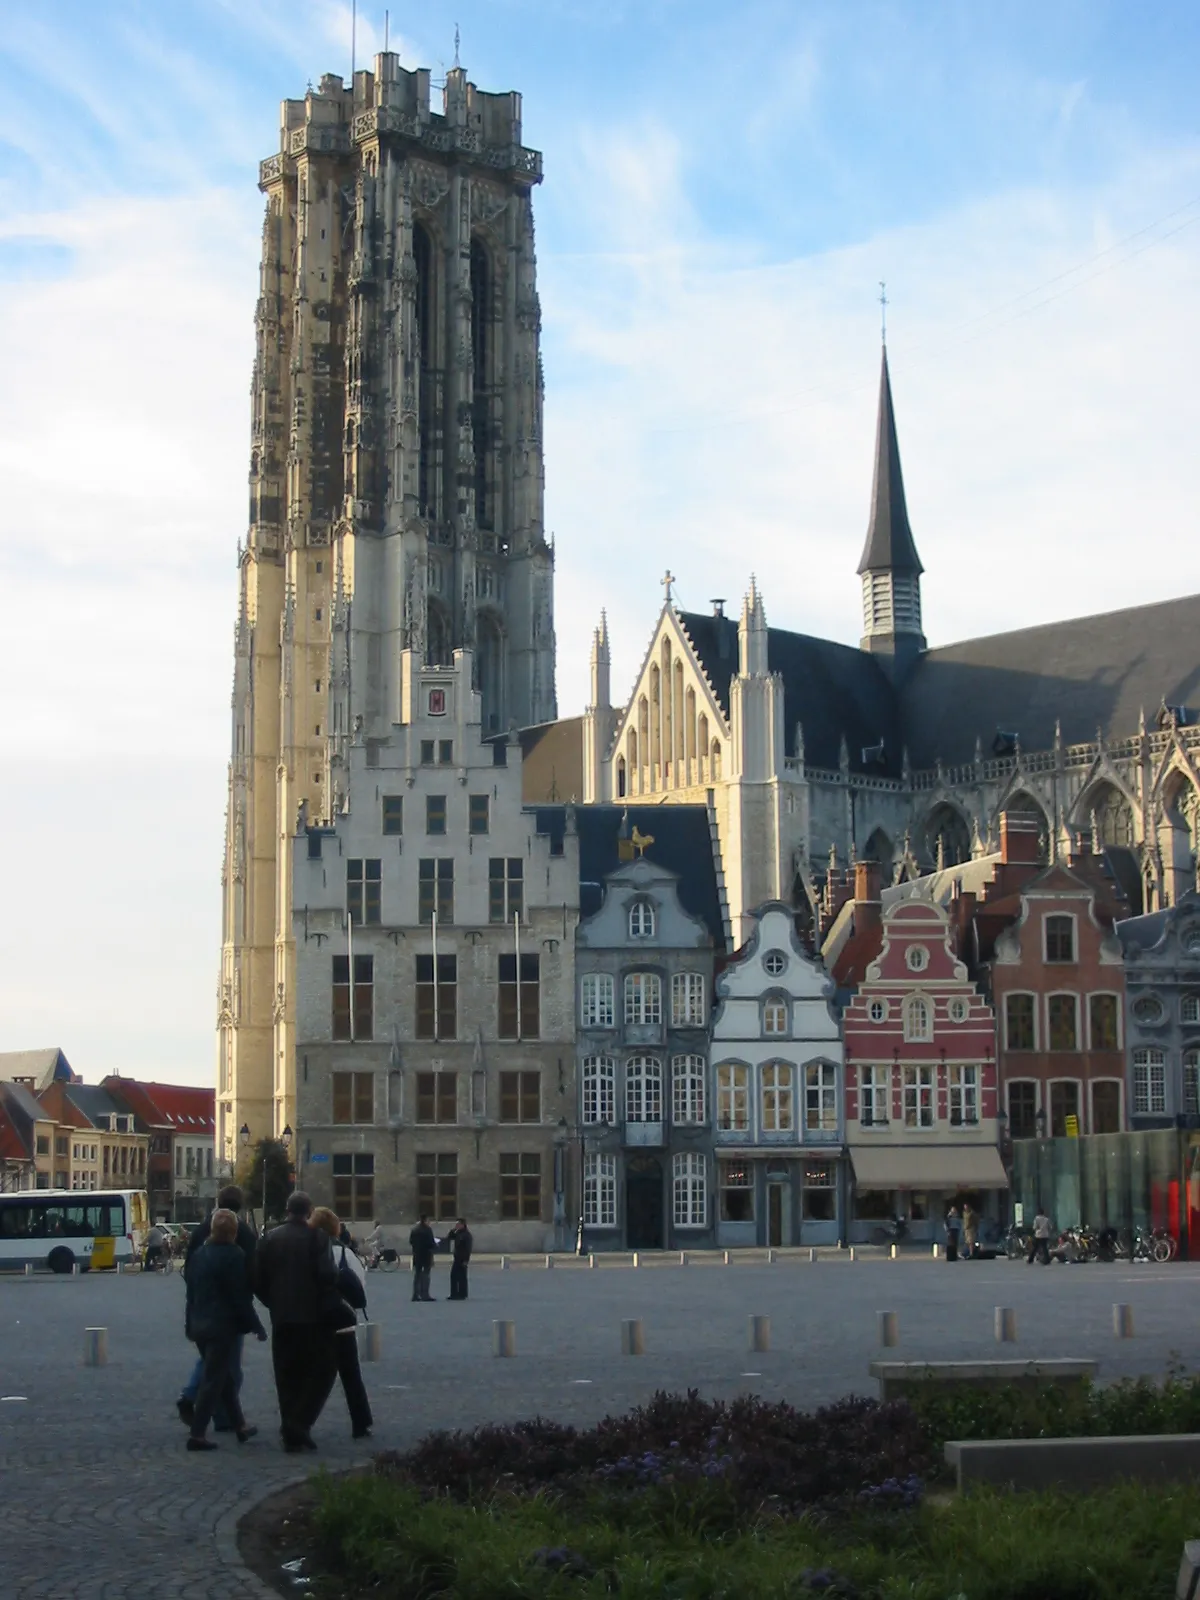 Image of Mechelen